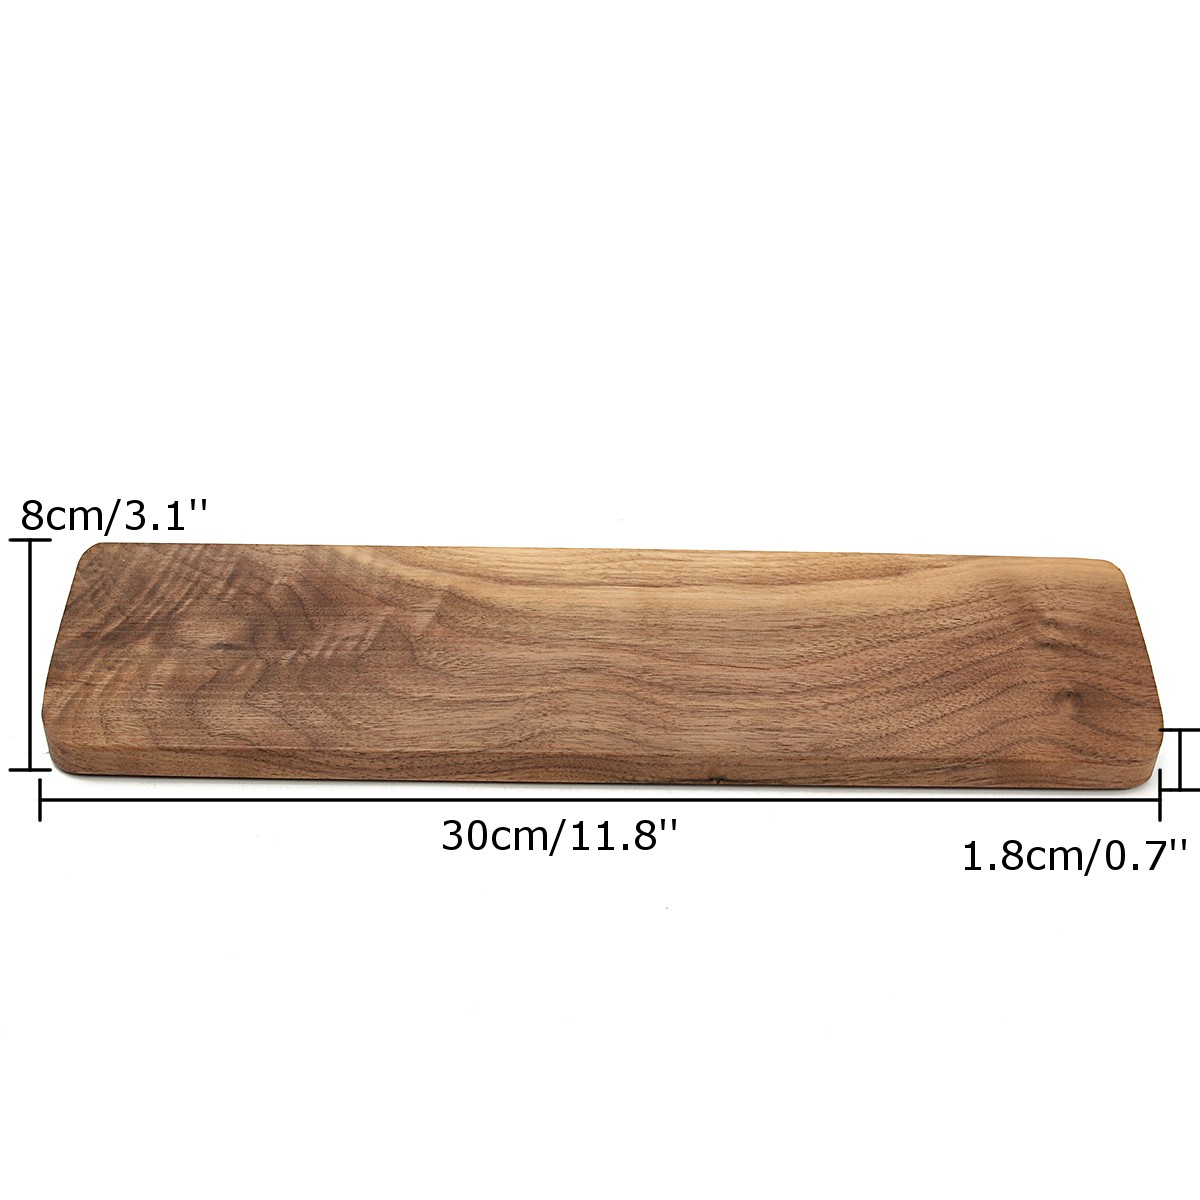 Black Walnutwood Wrist Rest Pad Keyboard Wood Wrist Protection Anti-skid Pad for 60-Key 60% Keyboard 11